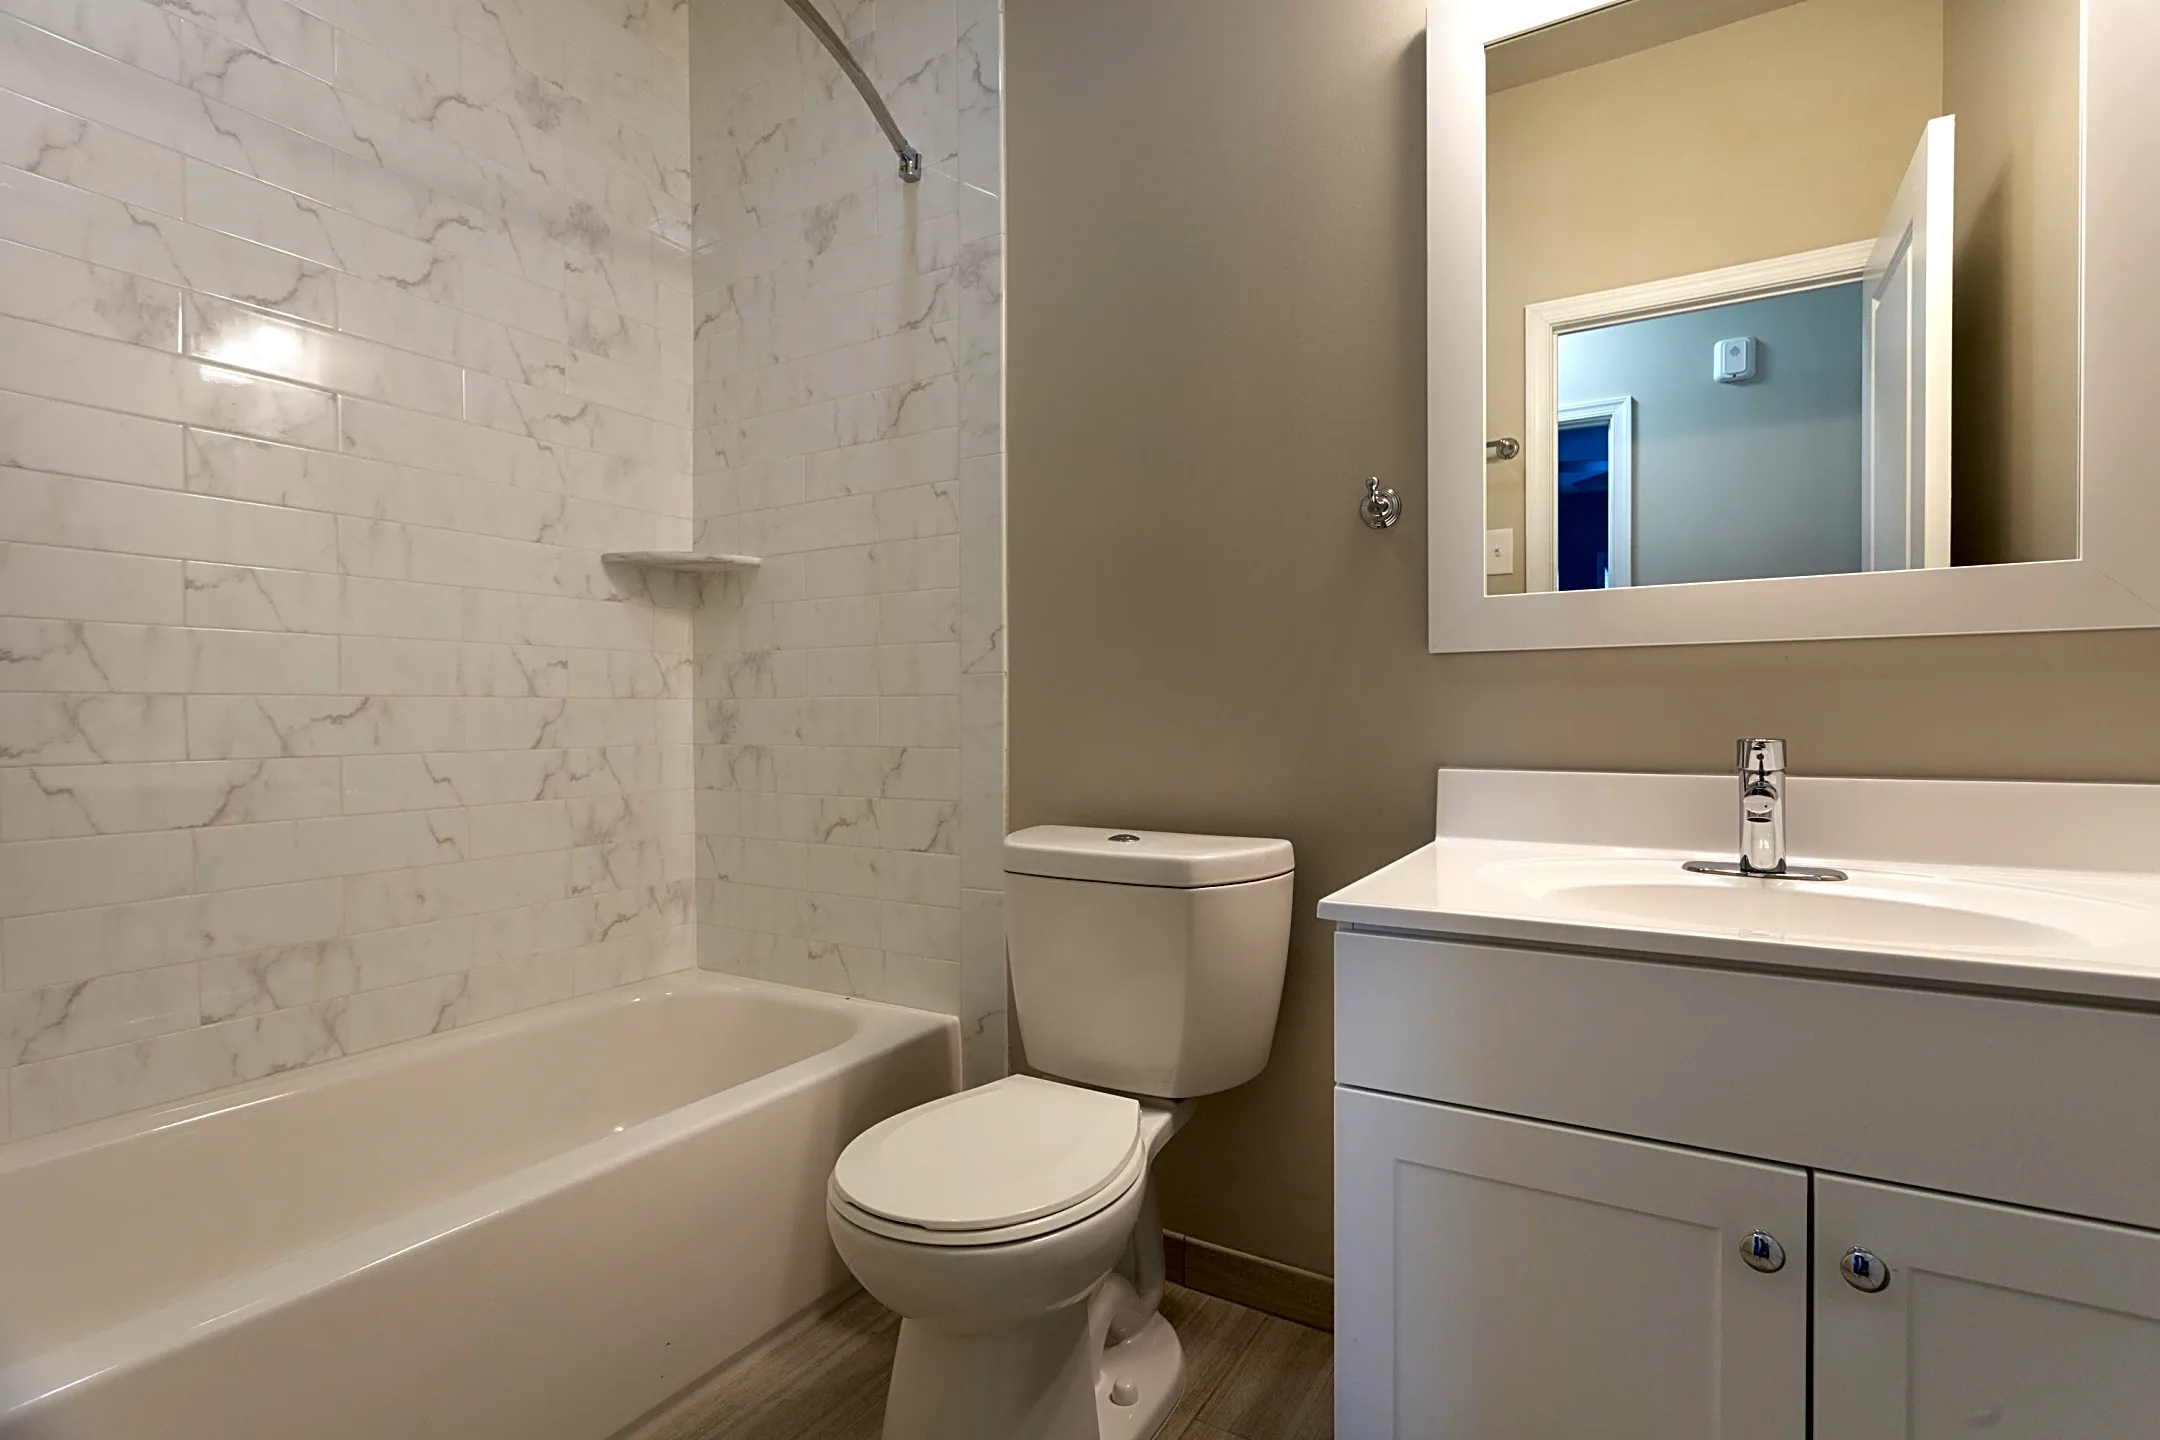 Bathroom - Radnor Preserve - Wayne, PA